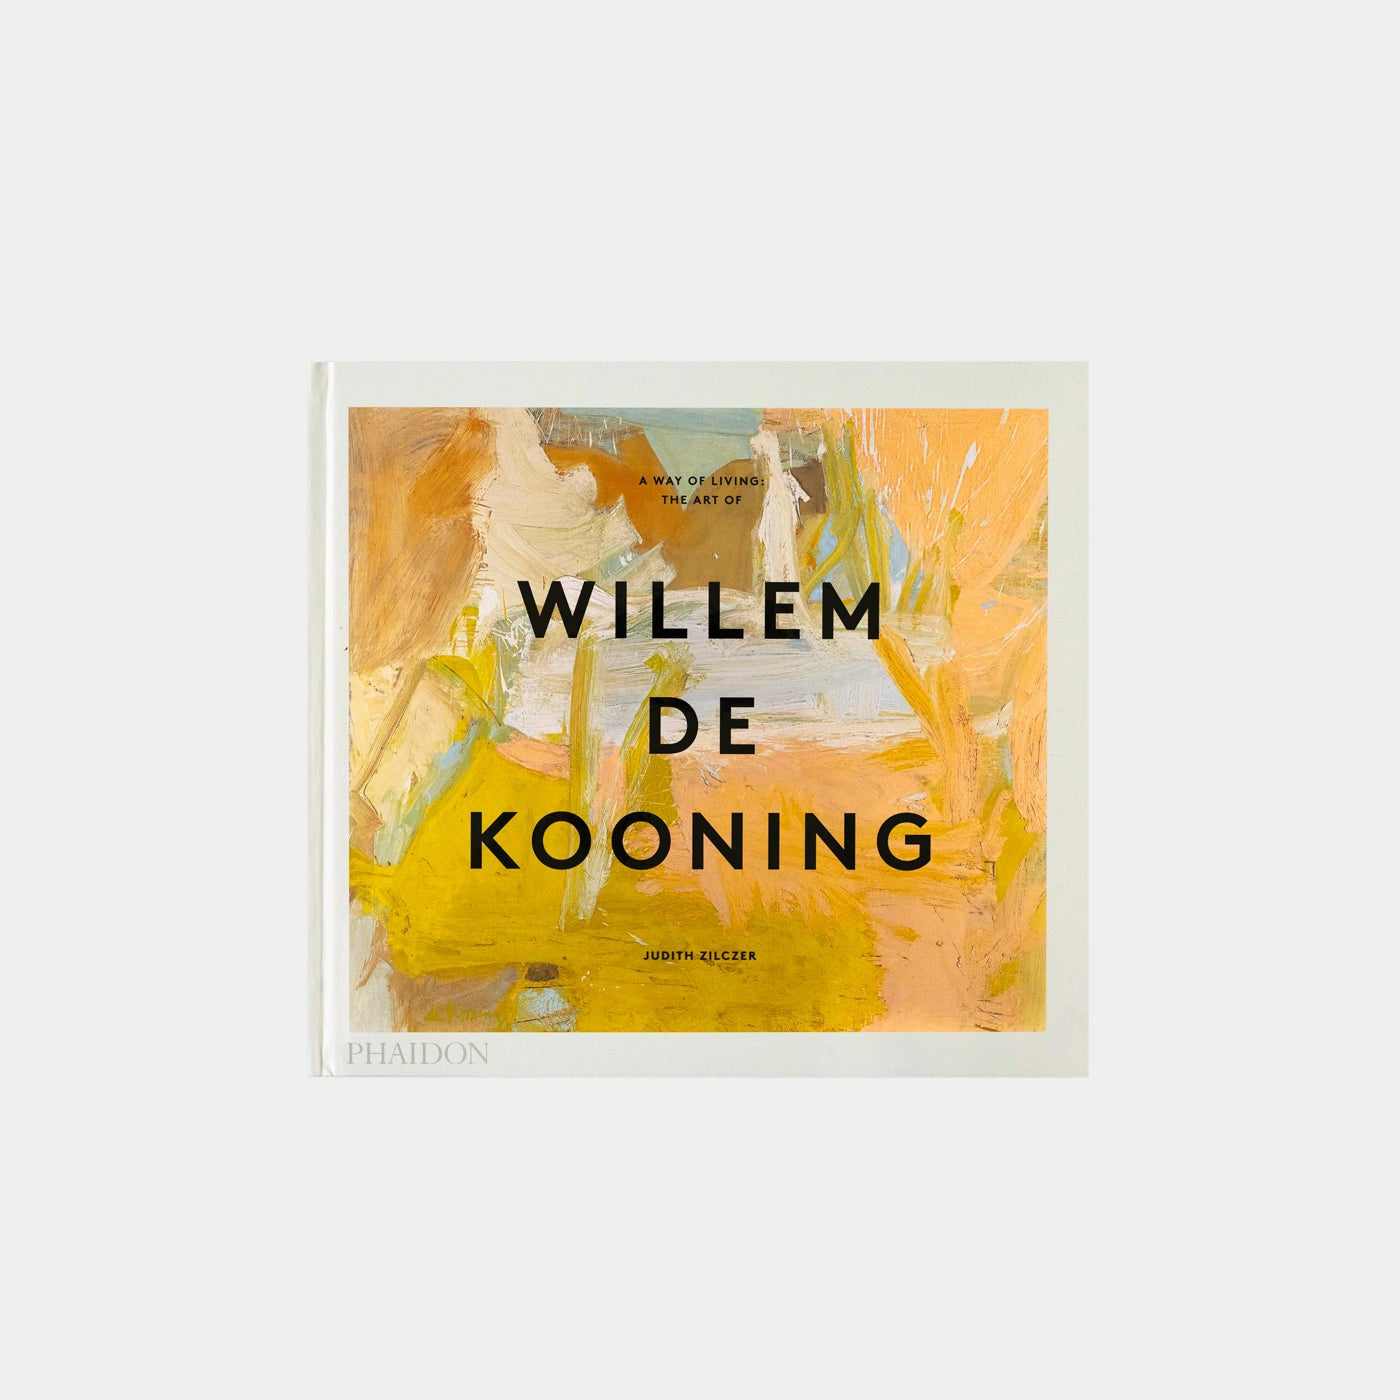 Sposób na życie: sztuka Willema de Kooninga